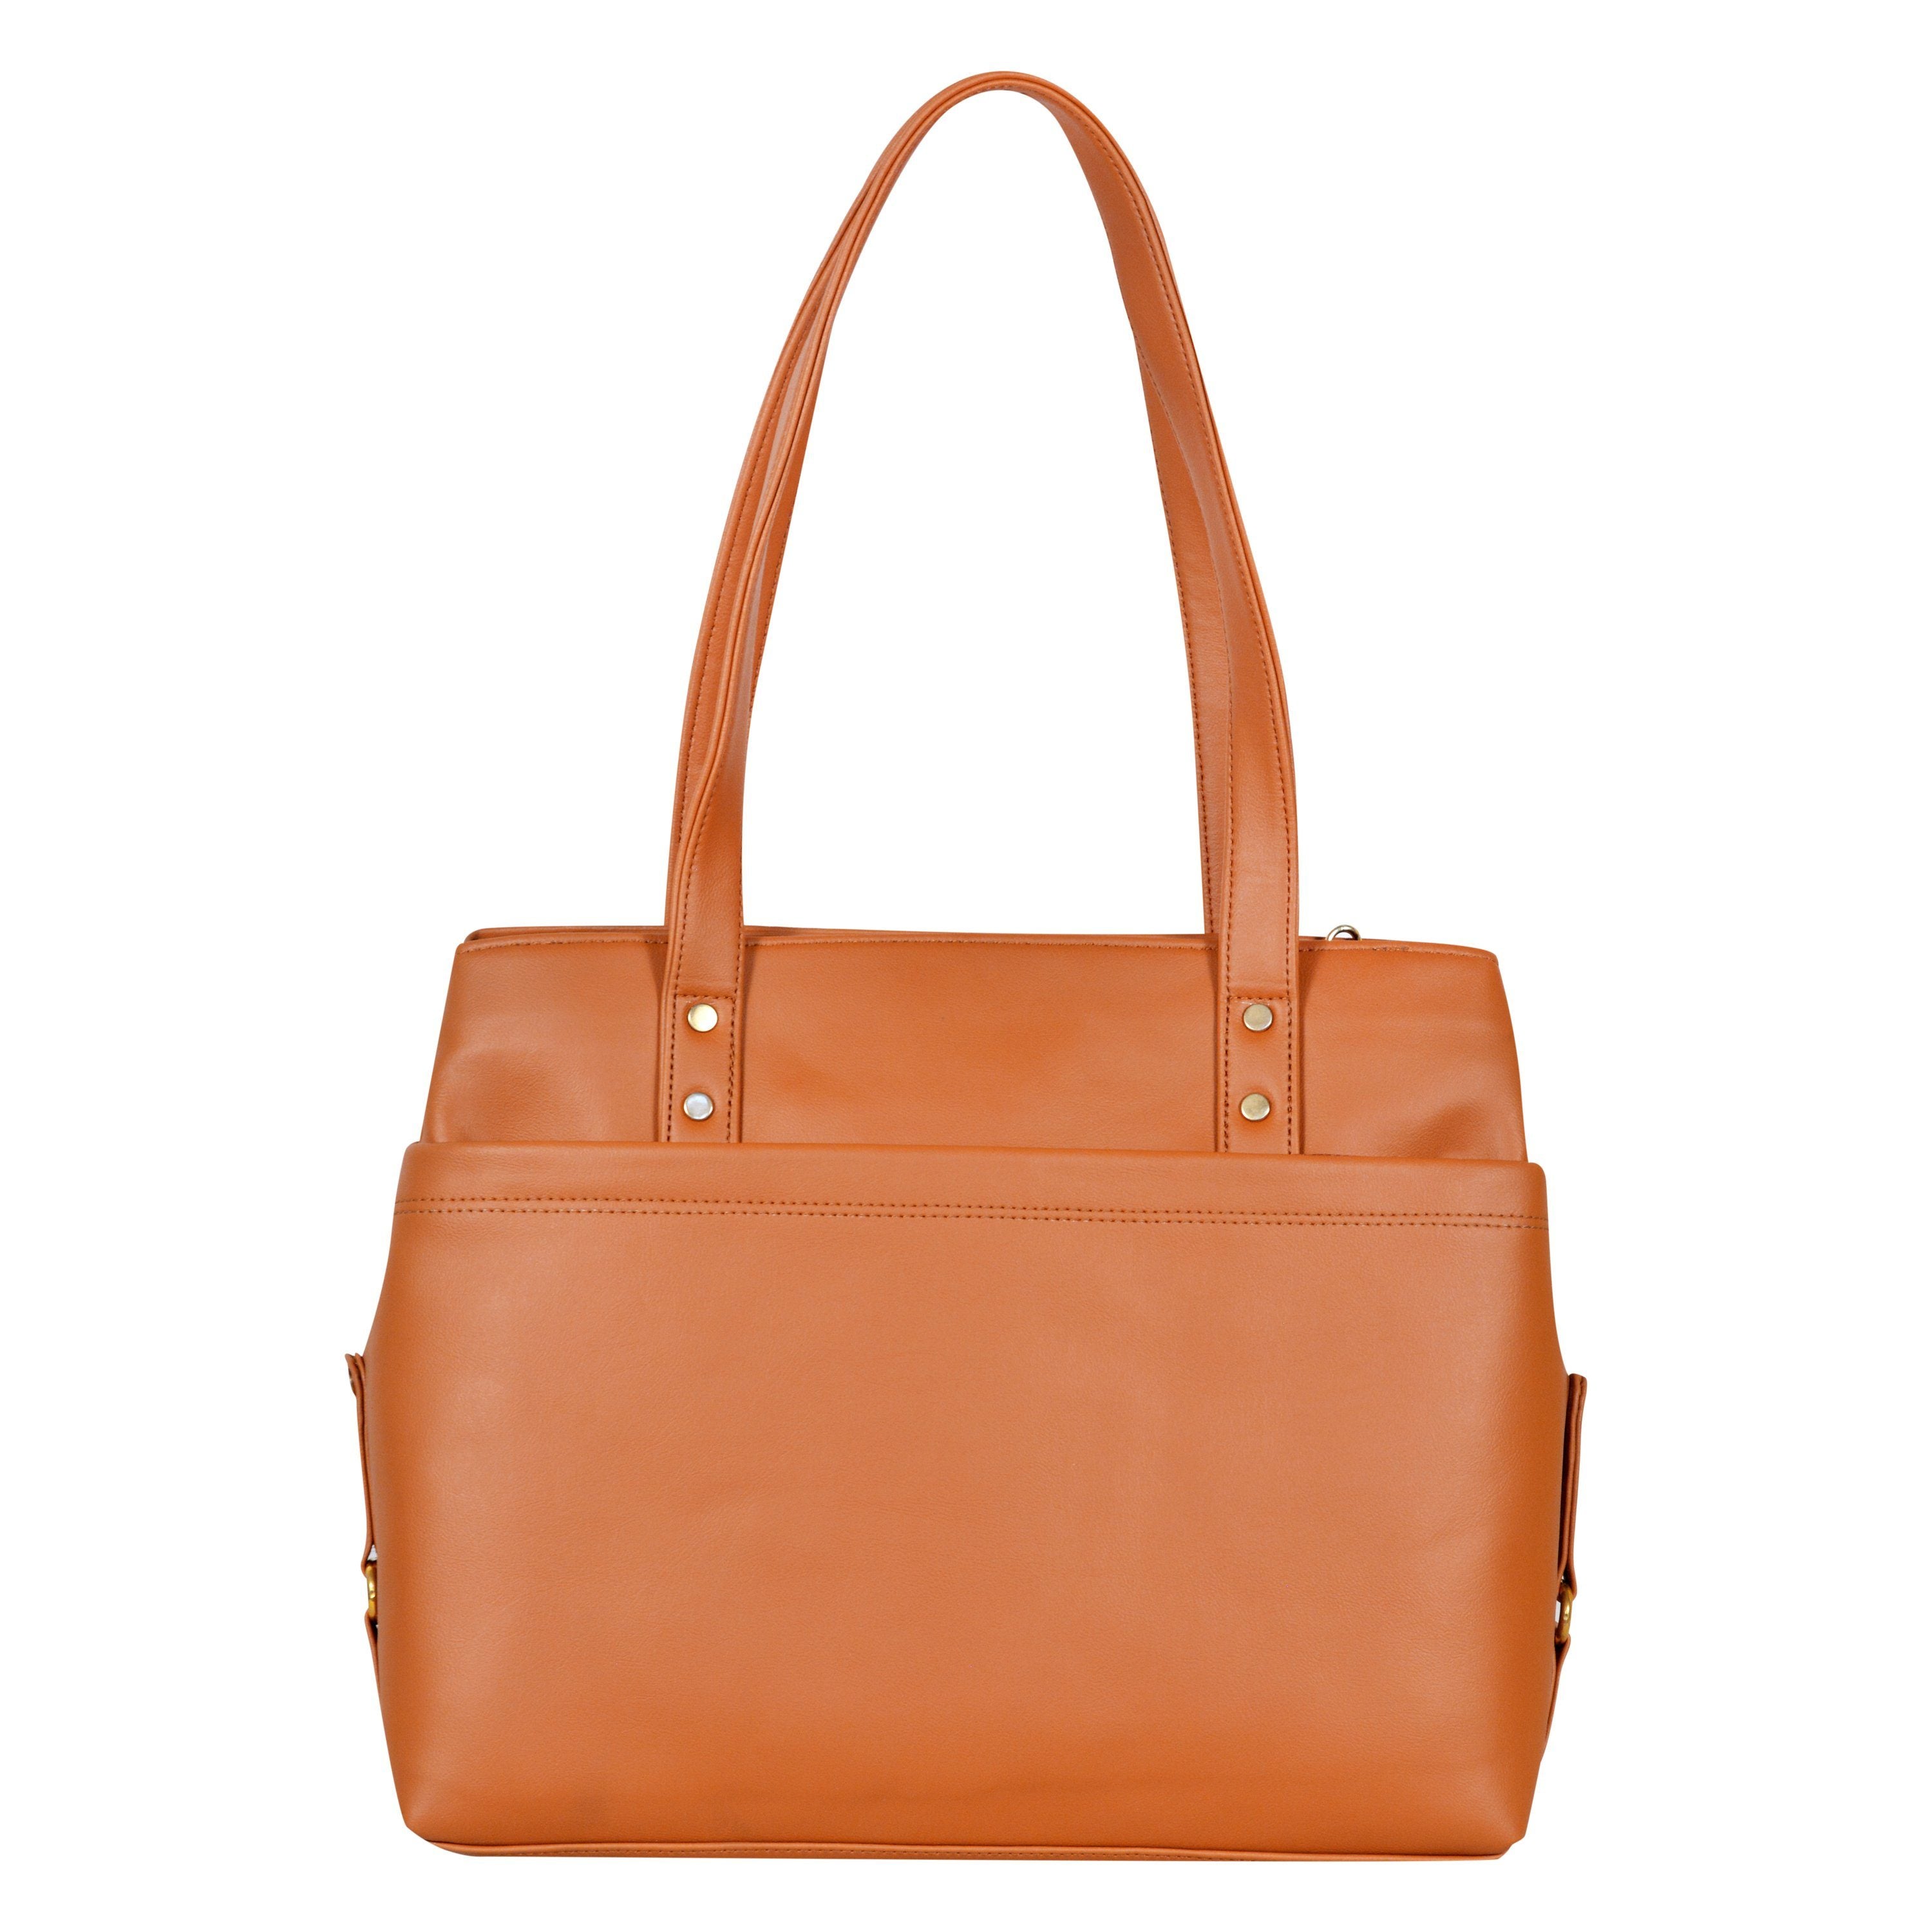 Wow! नई डिजाइन का बैग | homemade Handbag cutting and stitching // ladies  purse / clothes bag | Wow! नई डिजाइन का बैग | homemade Handbag cutting and  stitching // ladies purse /